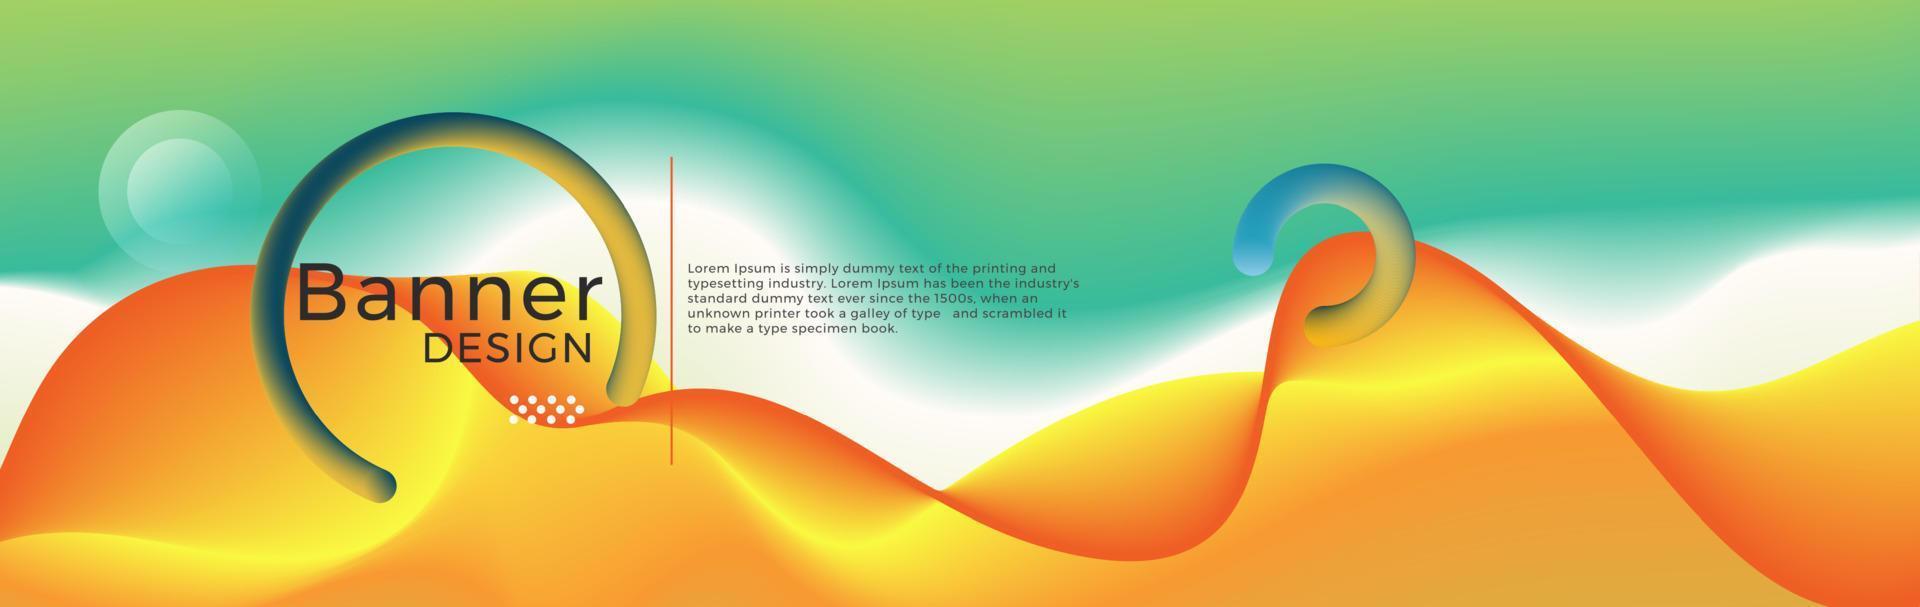 design de banner moderno abstrato. gradiente colorido com onda líquida. vetor